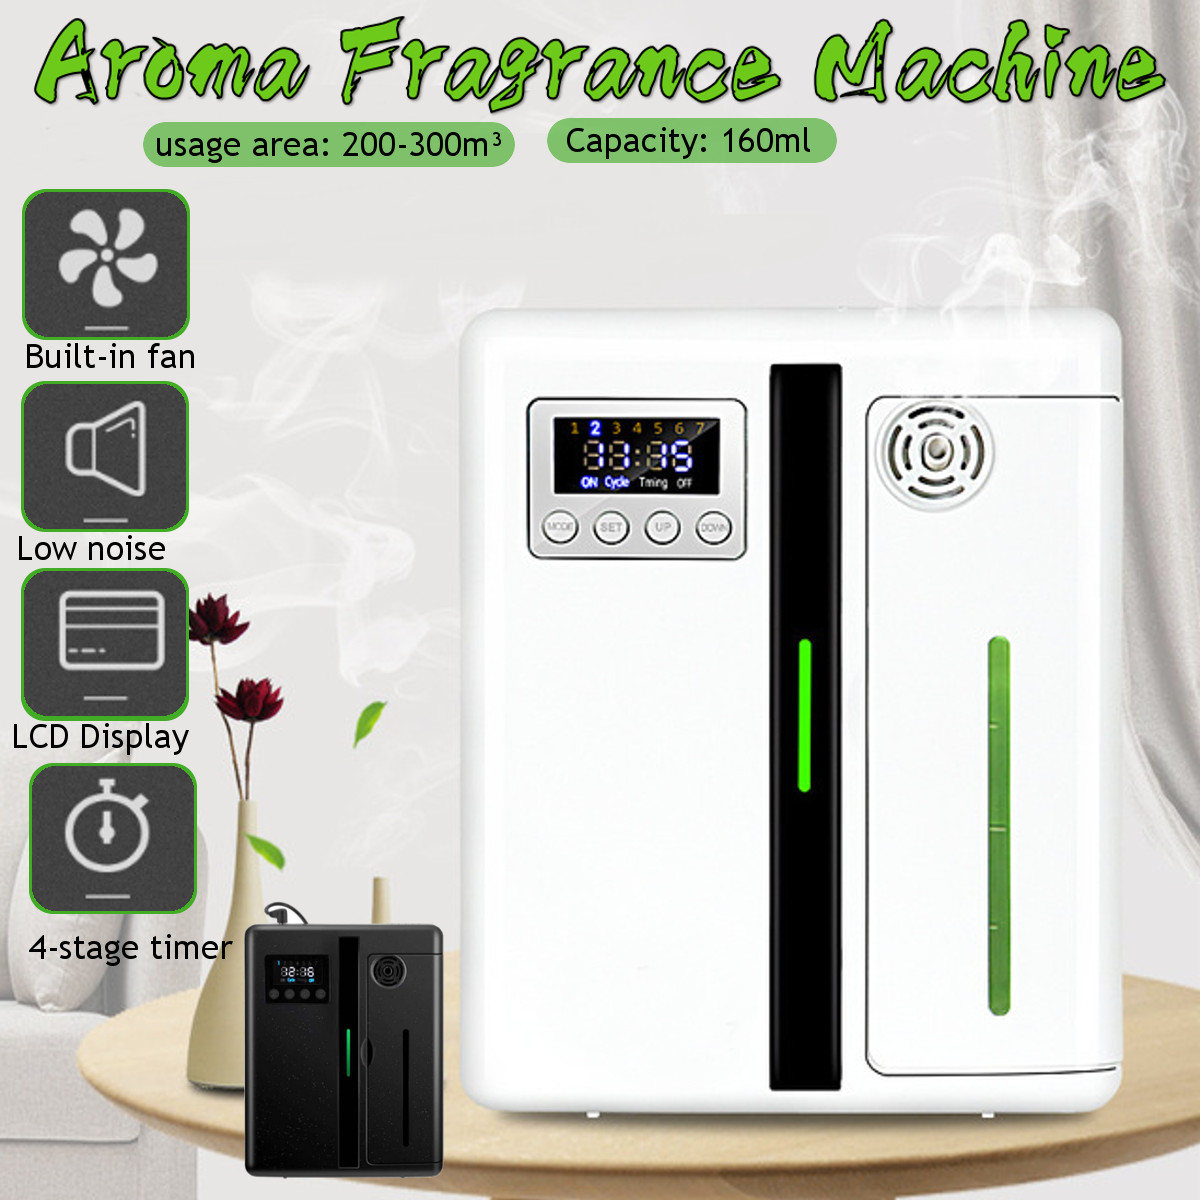 160ml Intelligent Aroma Fragrance Machine aromatizador de ambientedifusor de aroma for Home Office Hotel